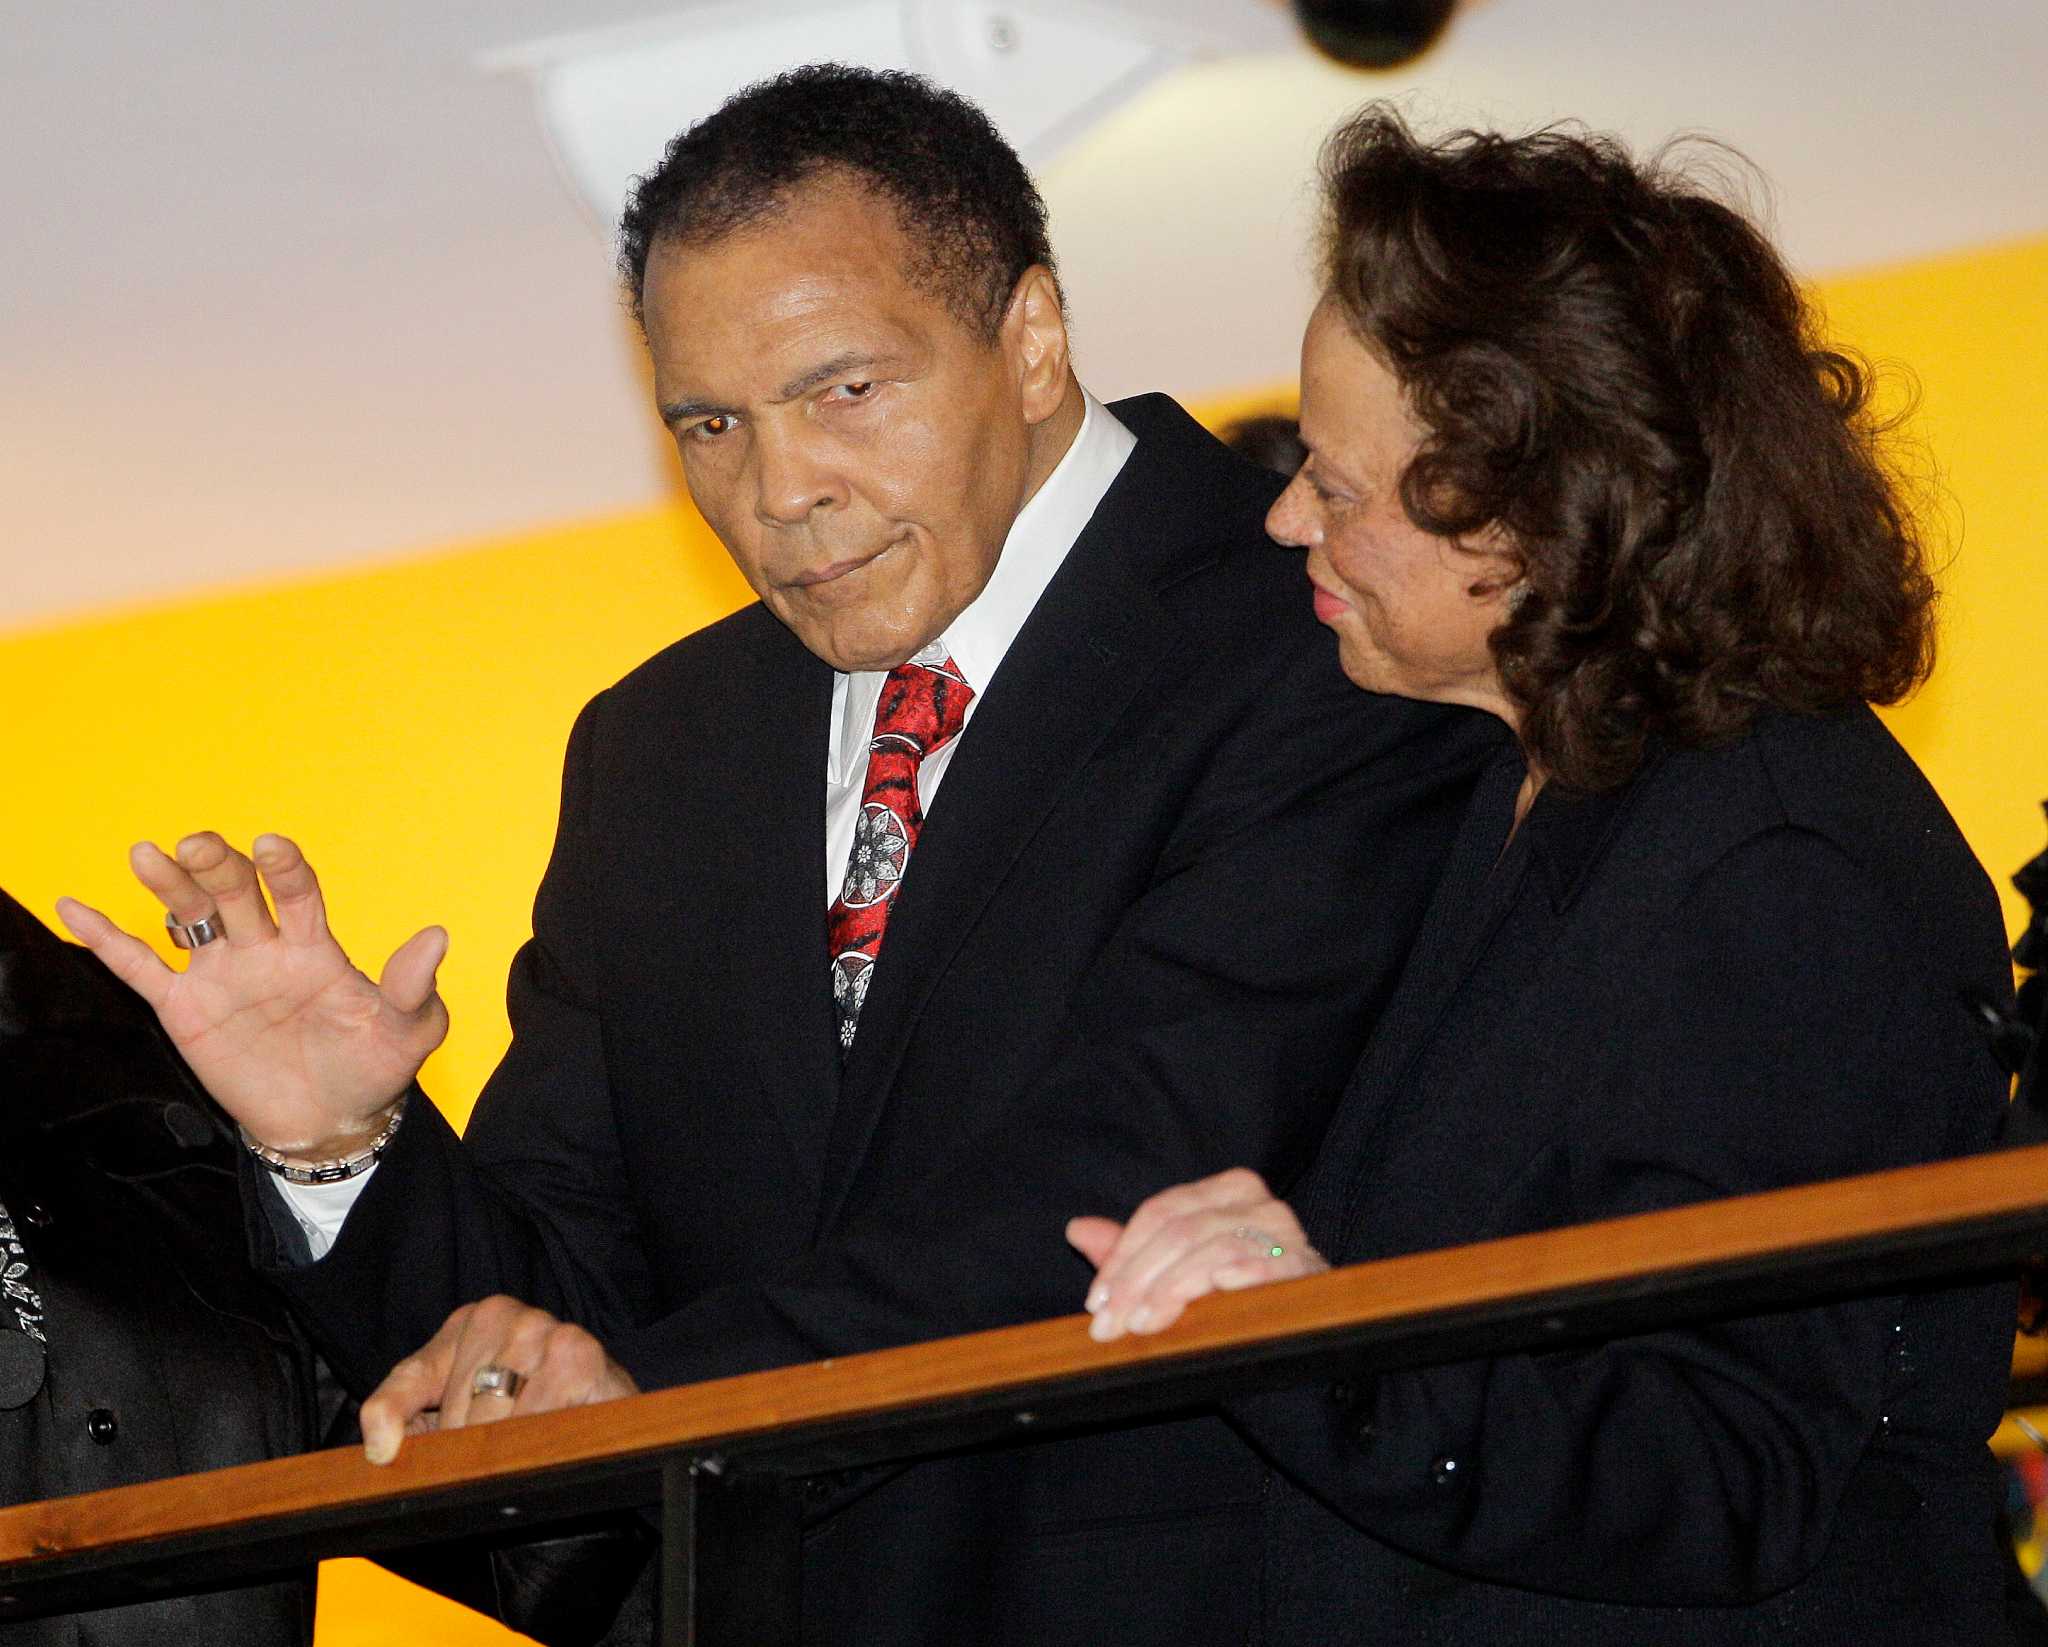 Muhammad Ali awards to honor humanitarian efforts